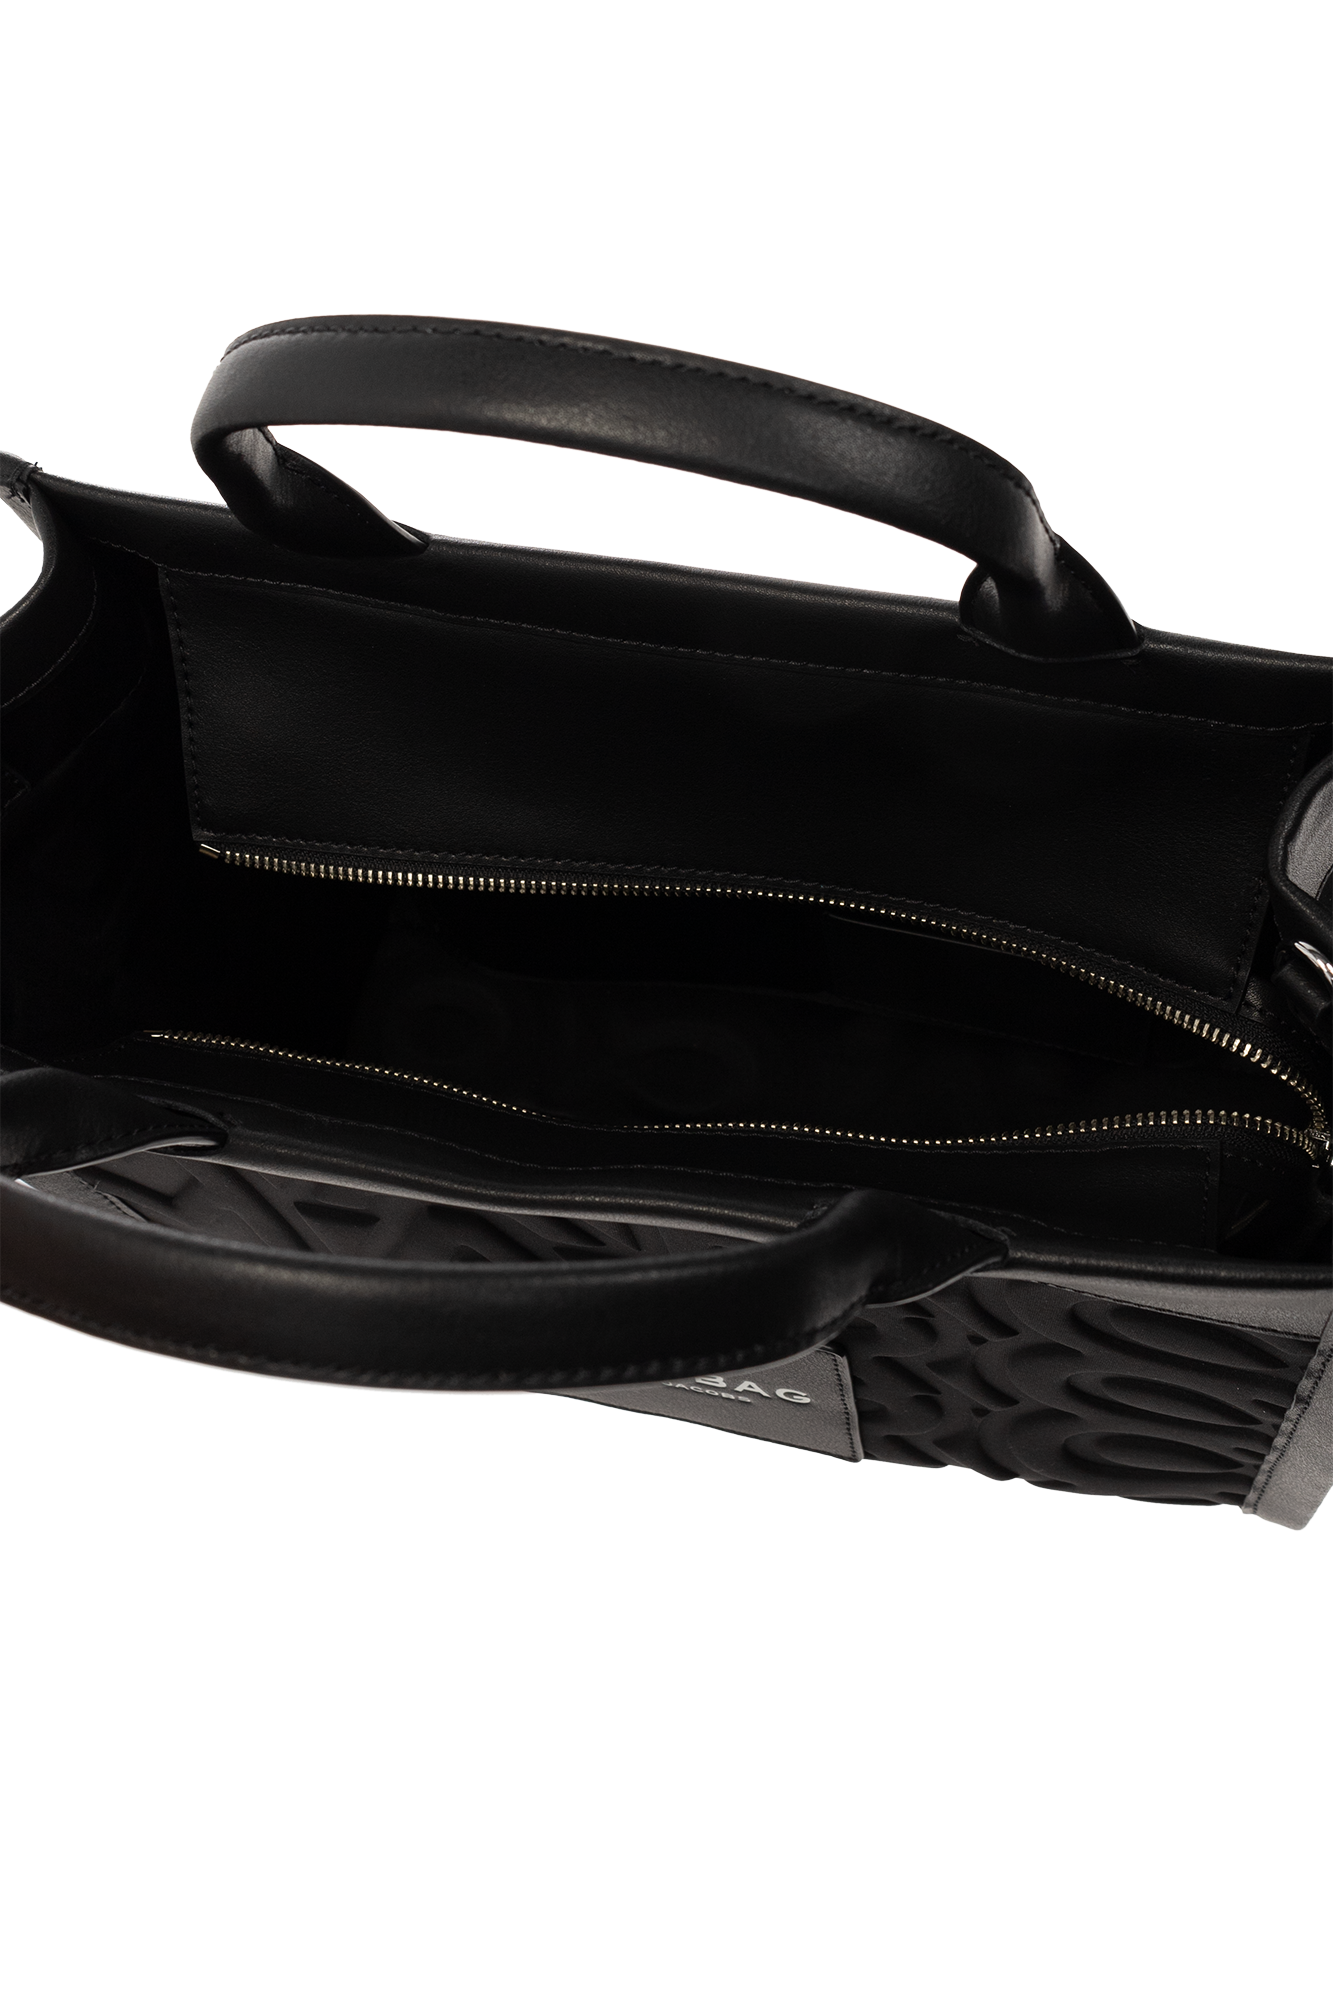 Marc Jacobs The Monogram Neoprene Duffle Bag in Black